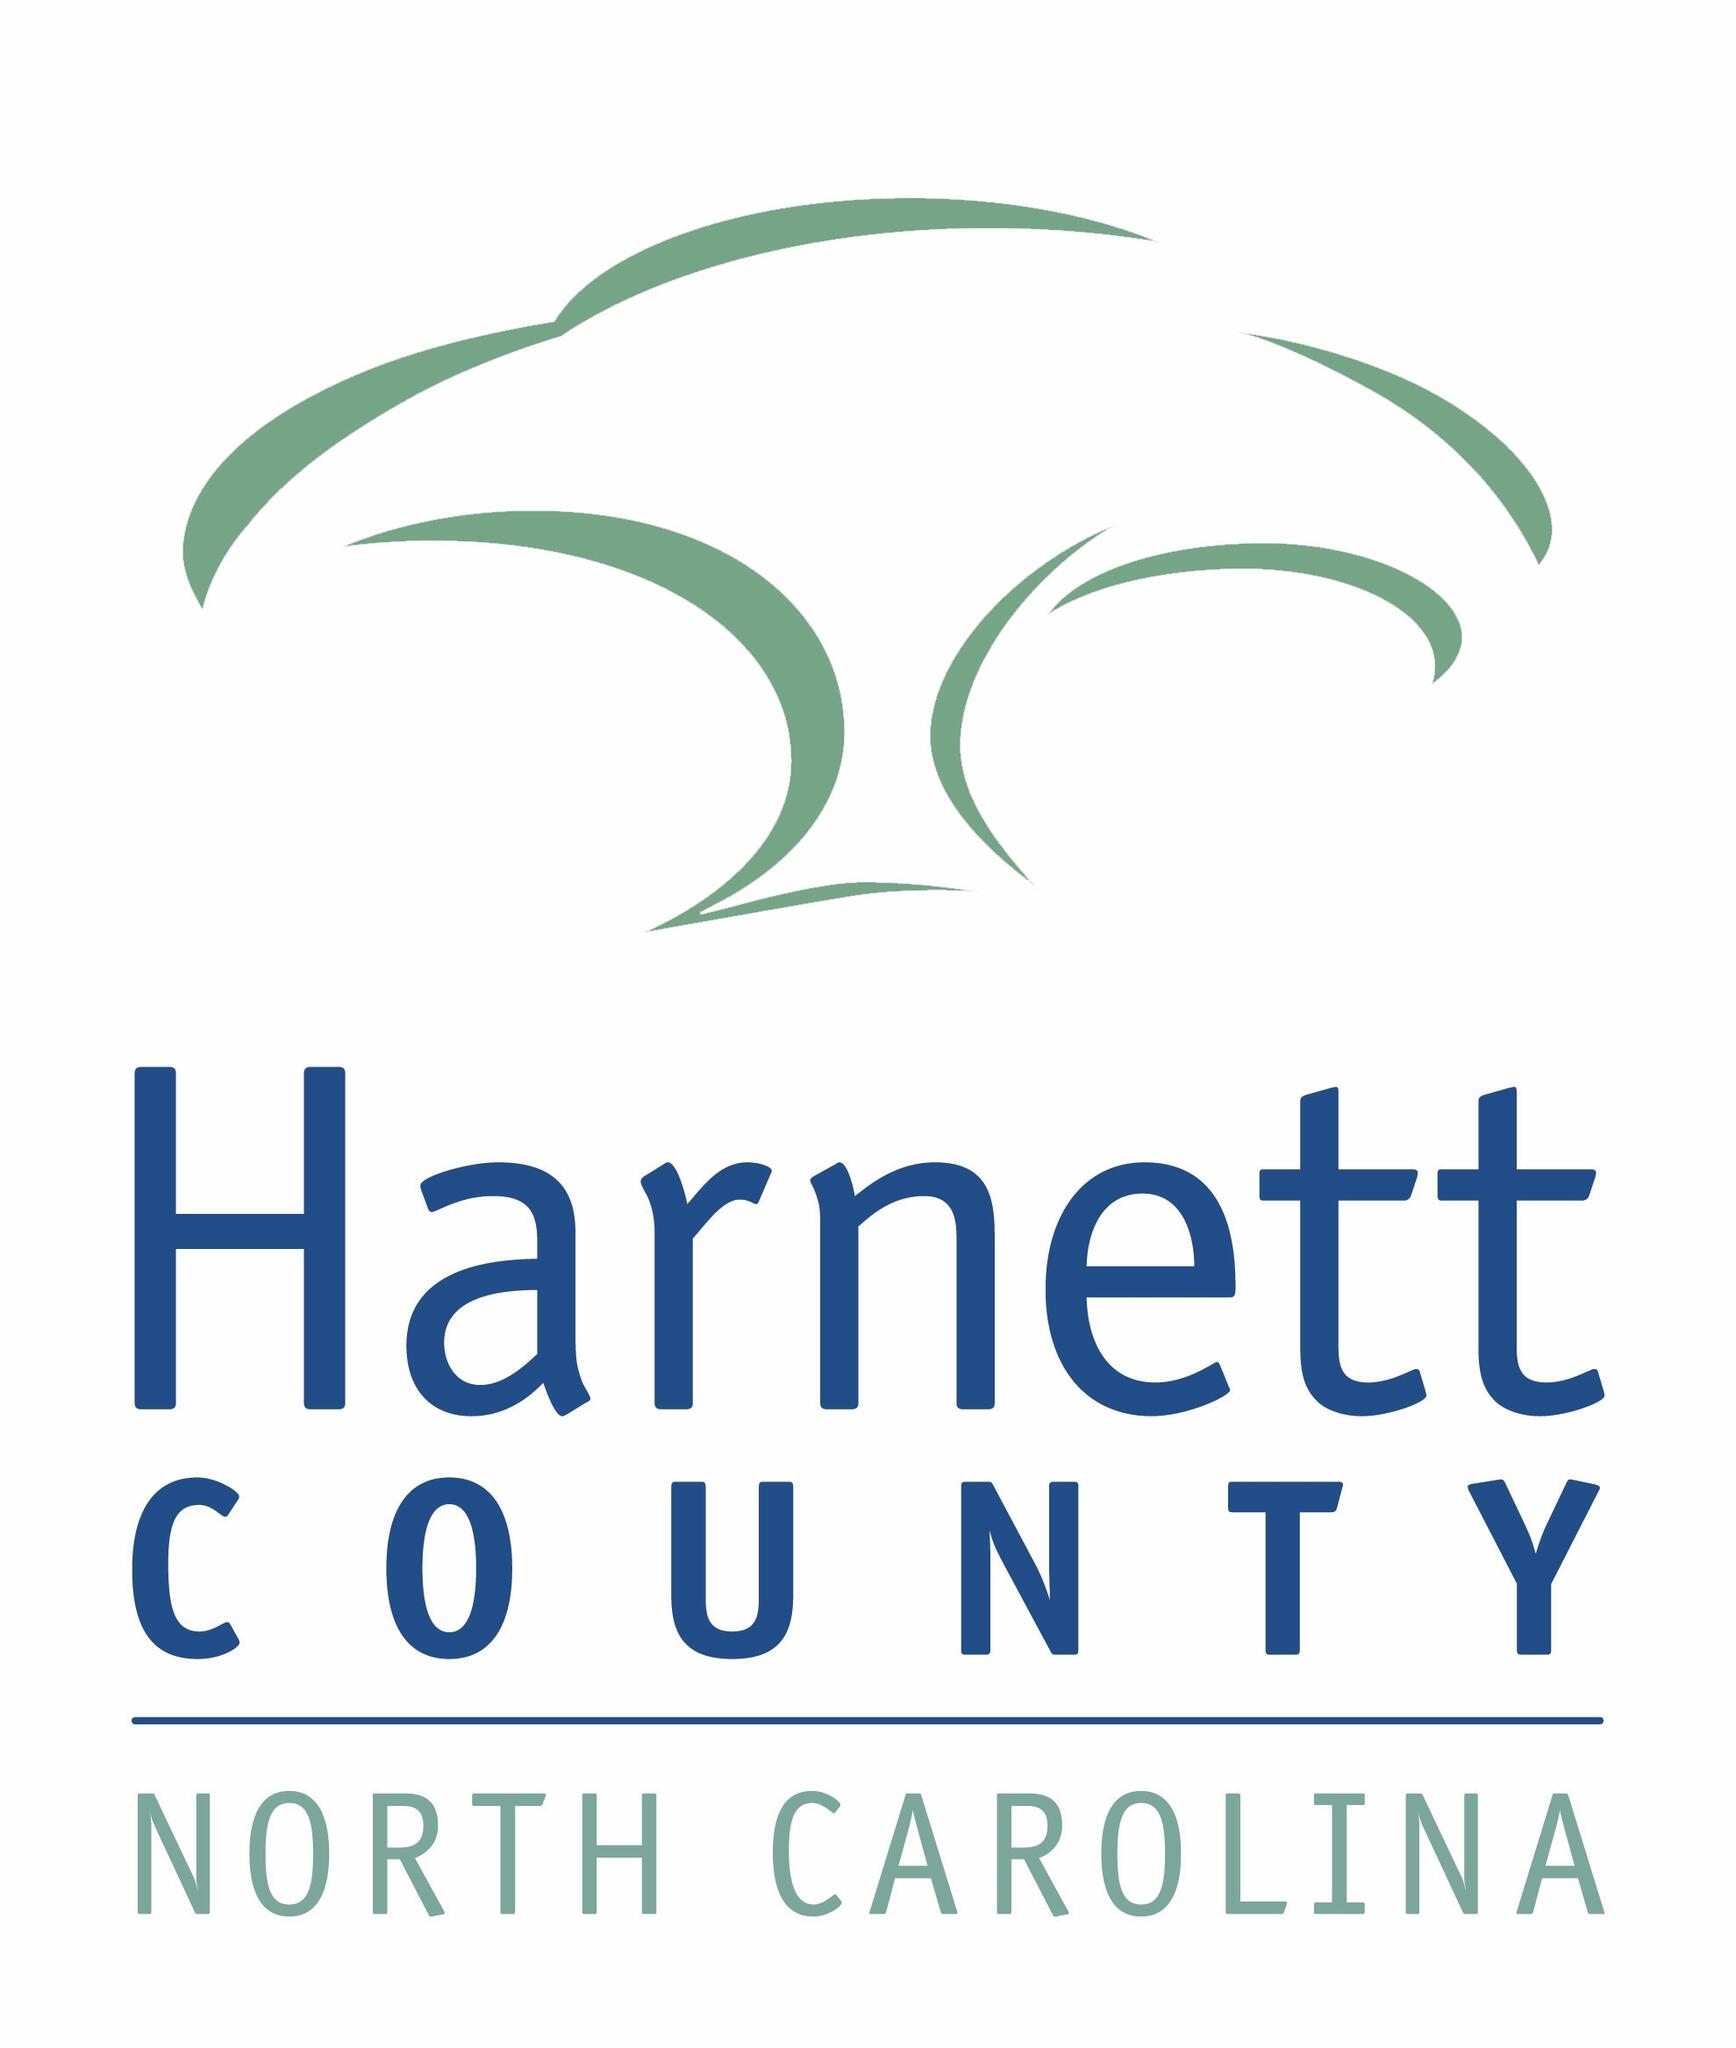 harnett county